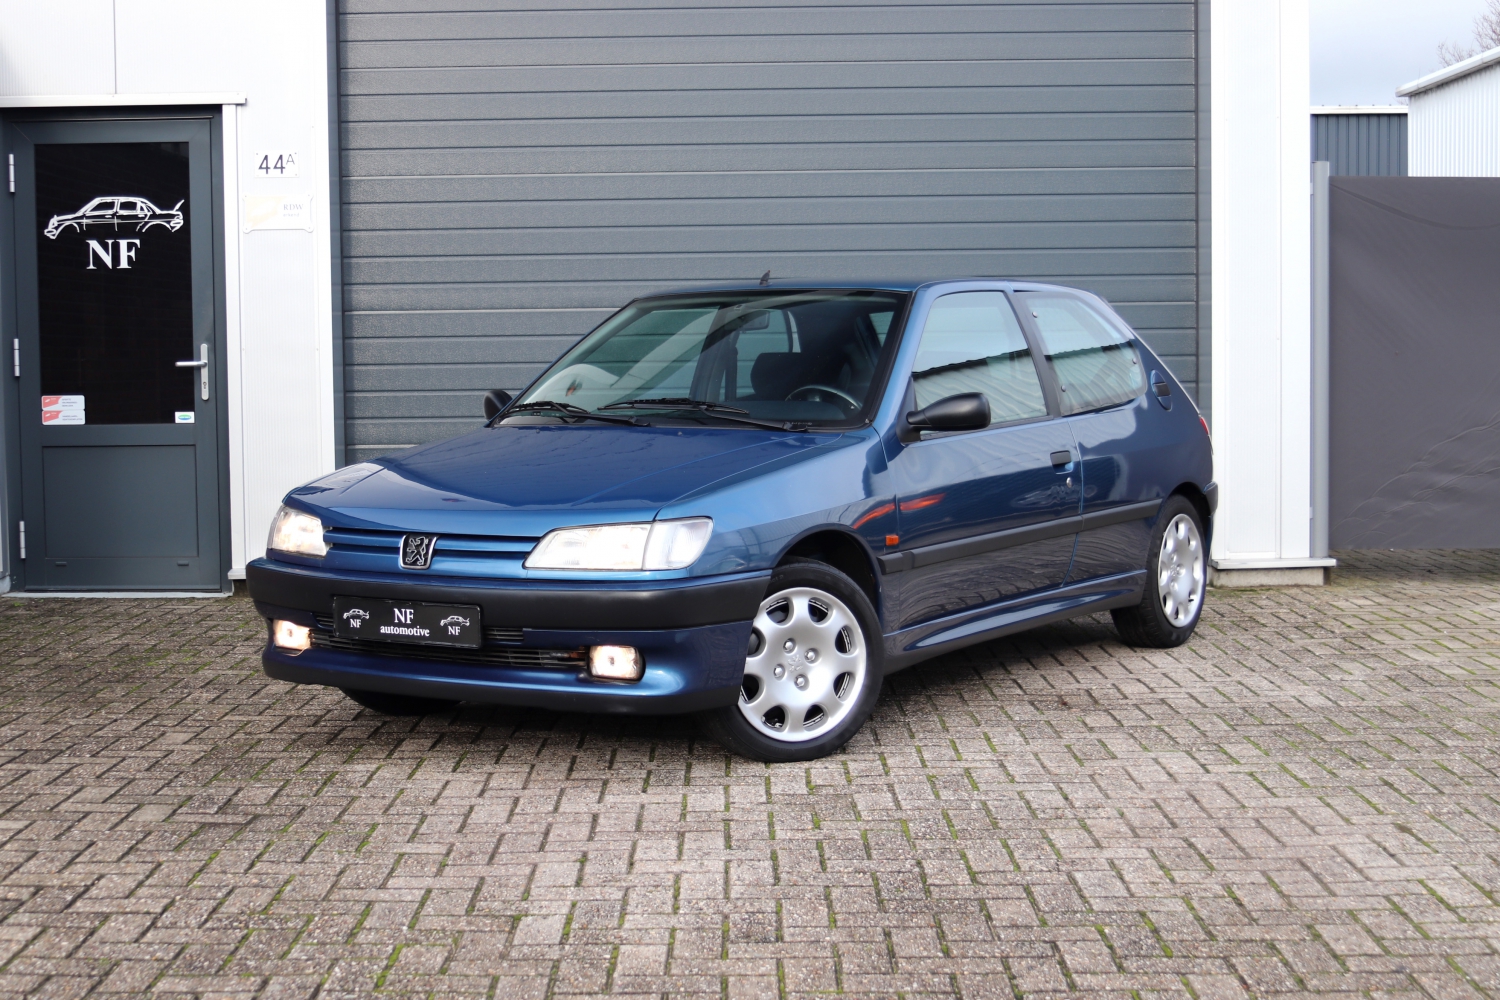 Peugeot-306XSI-1995-LZFZ70-001.jpg